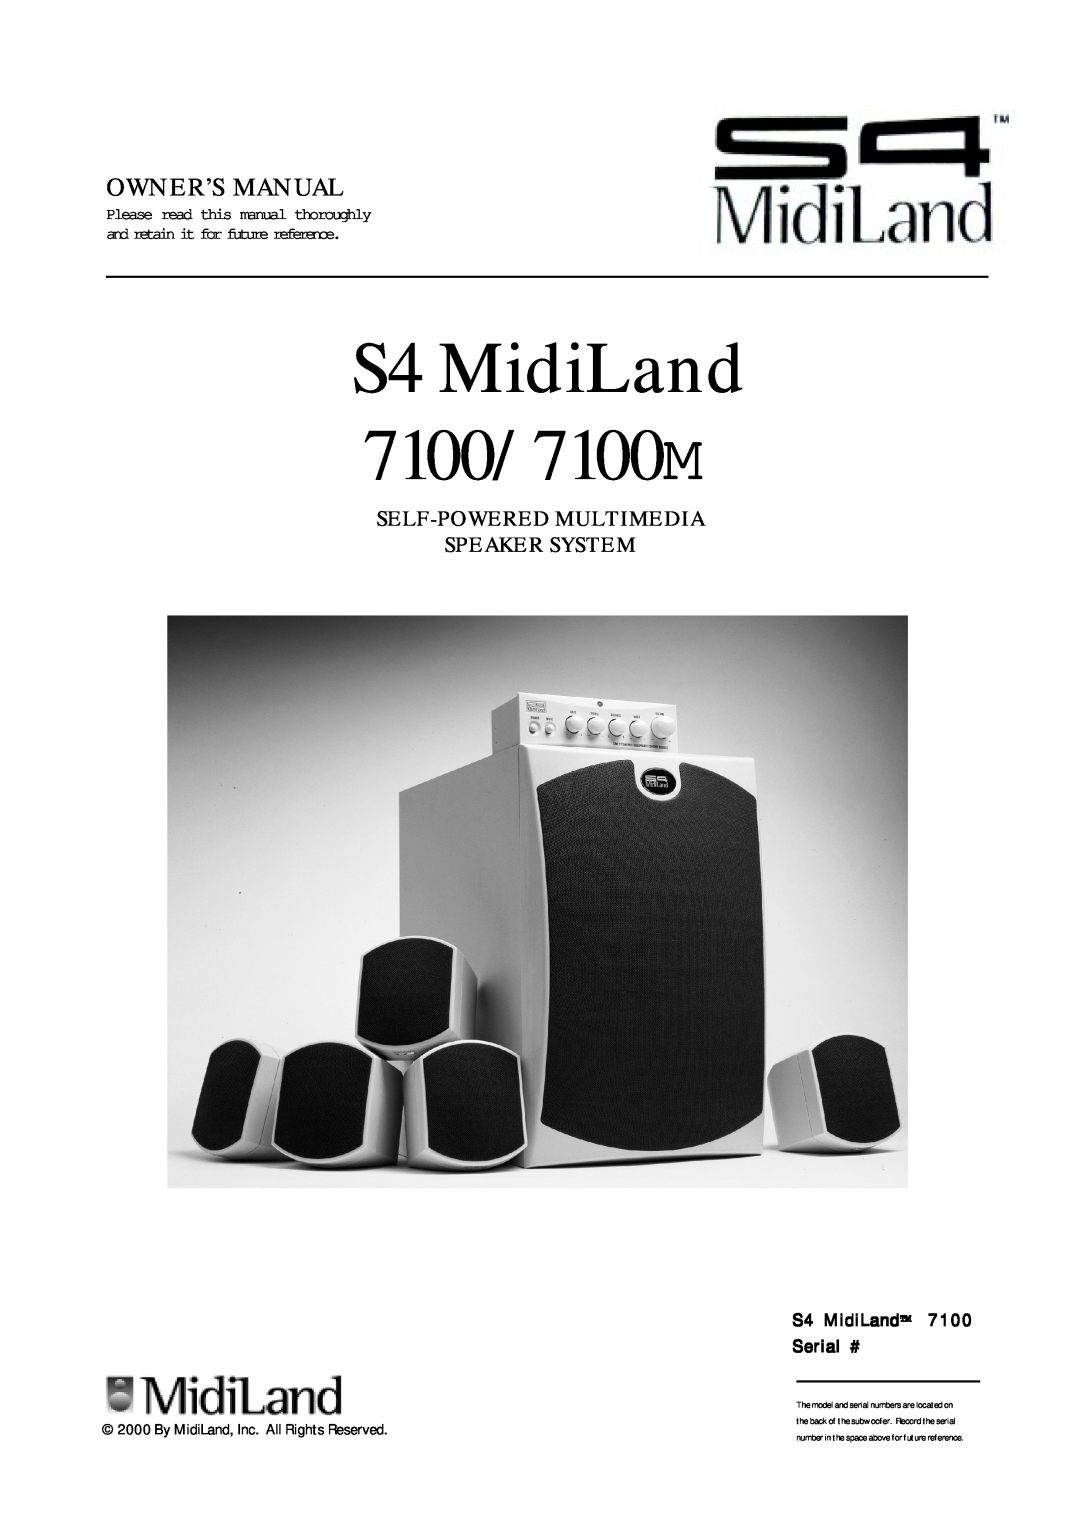 MidiLand owner manual S4 MidiLand Serial #, S4 MidiLand 7100/7100M, Owner’S Manual 